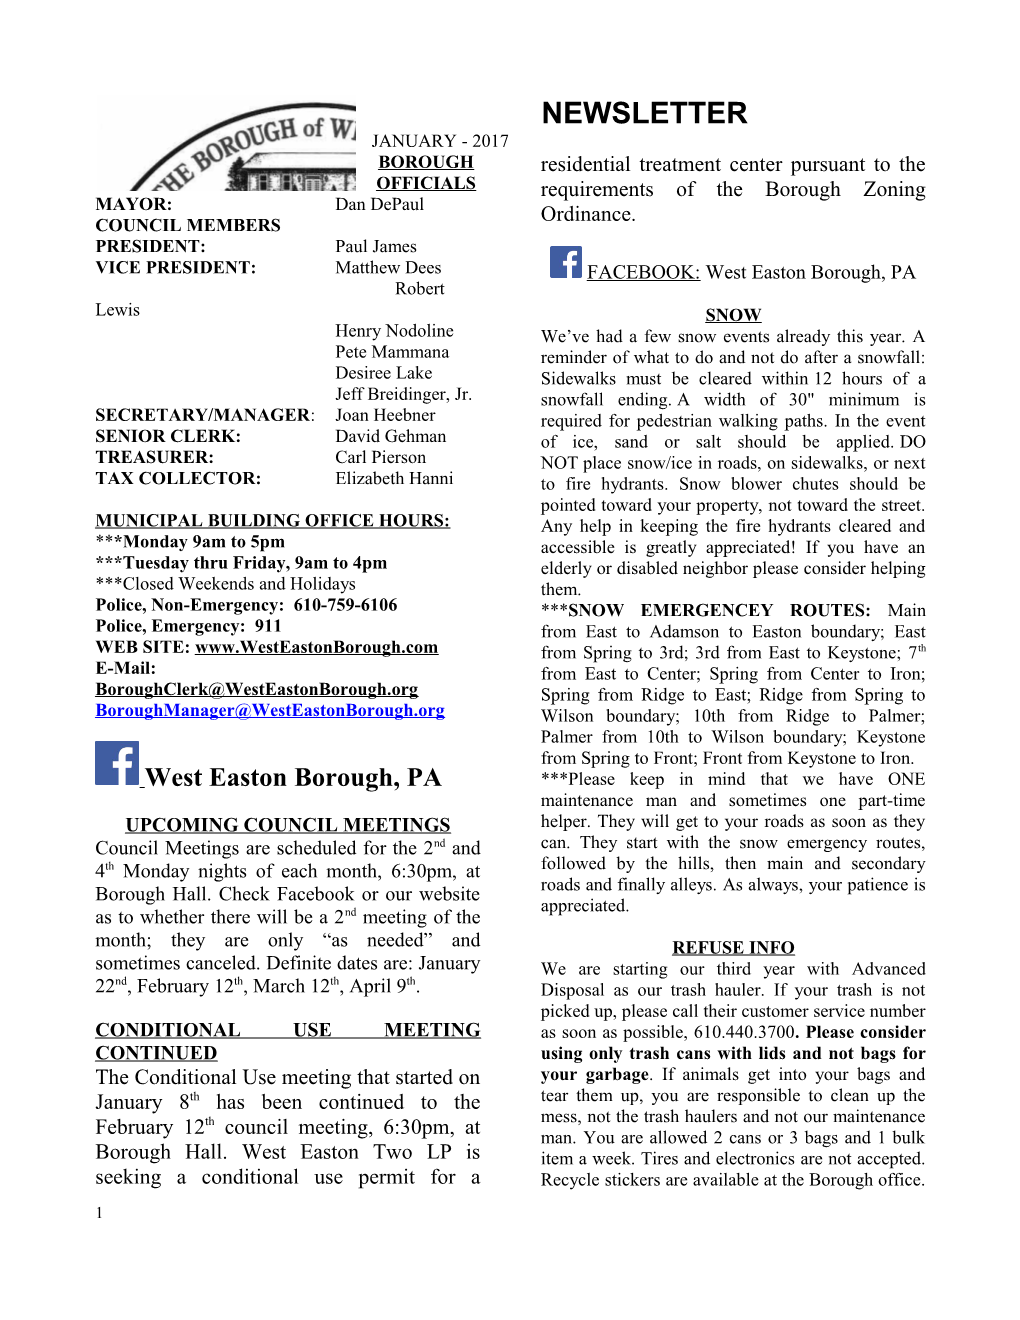 Borough of West Easton Newsletter